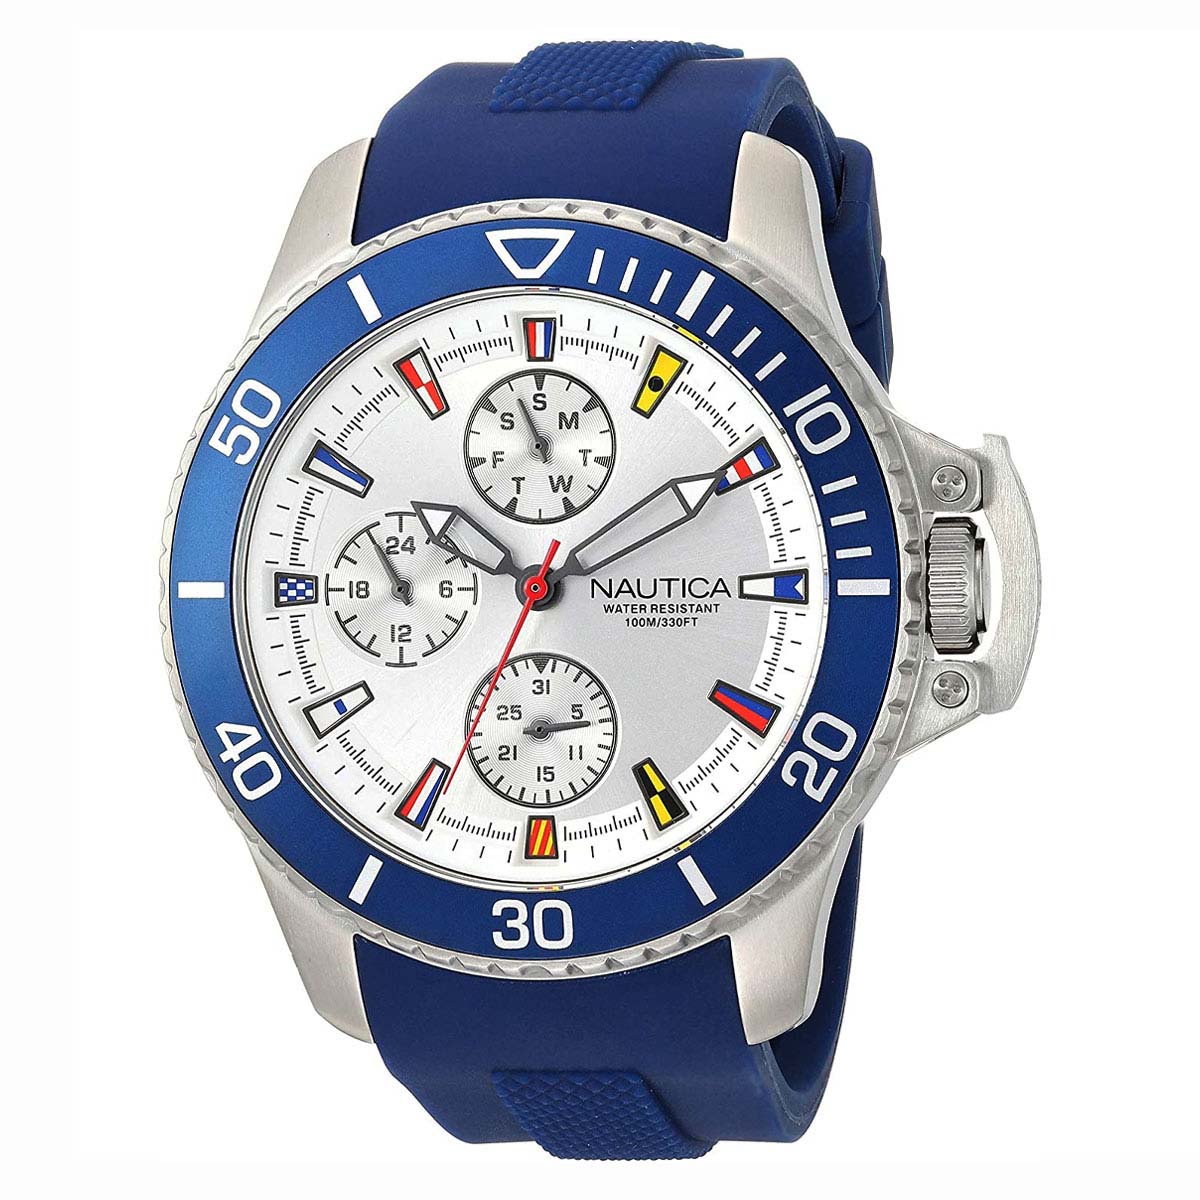 Reloj Nautica Silicona Azul con Plateado NAPBYS002 | SKU: NAU-1 -